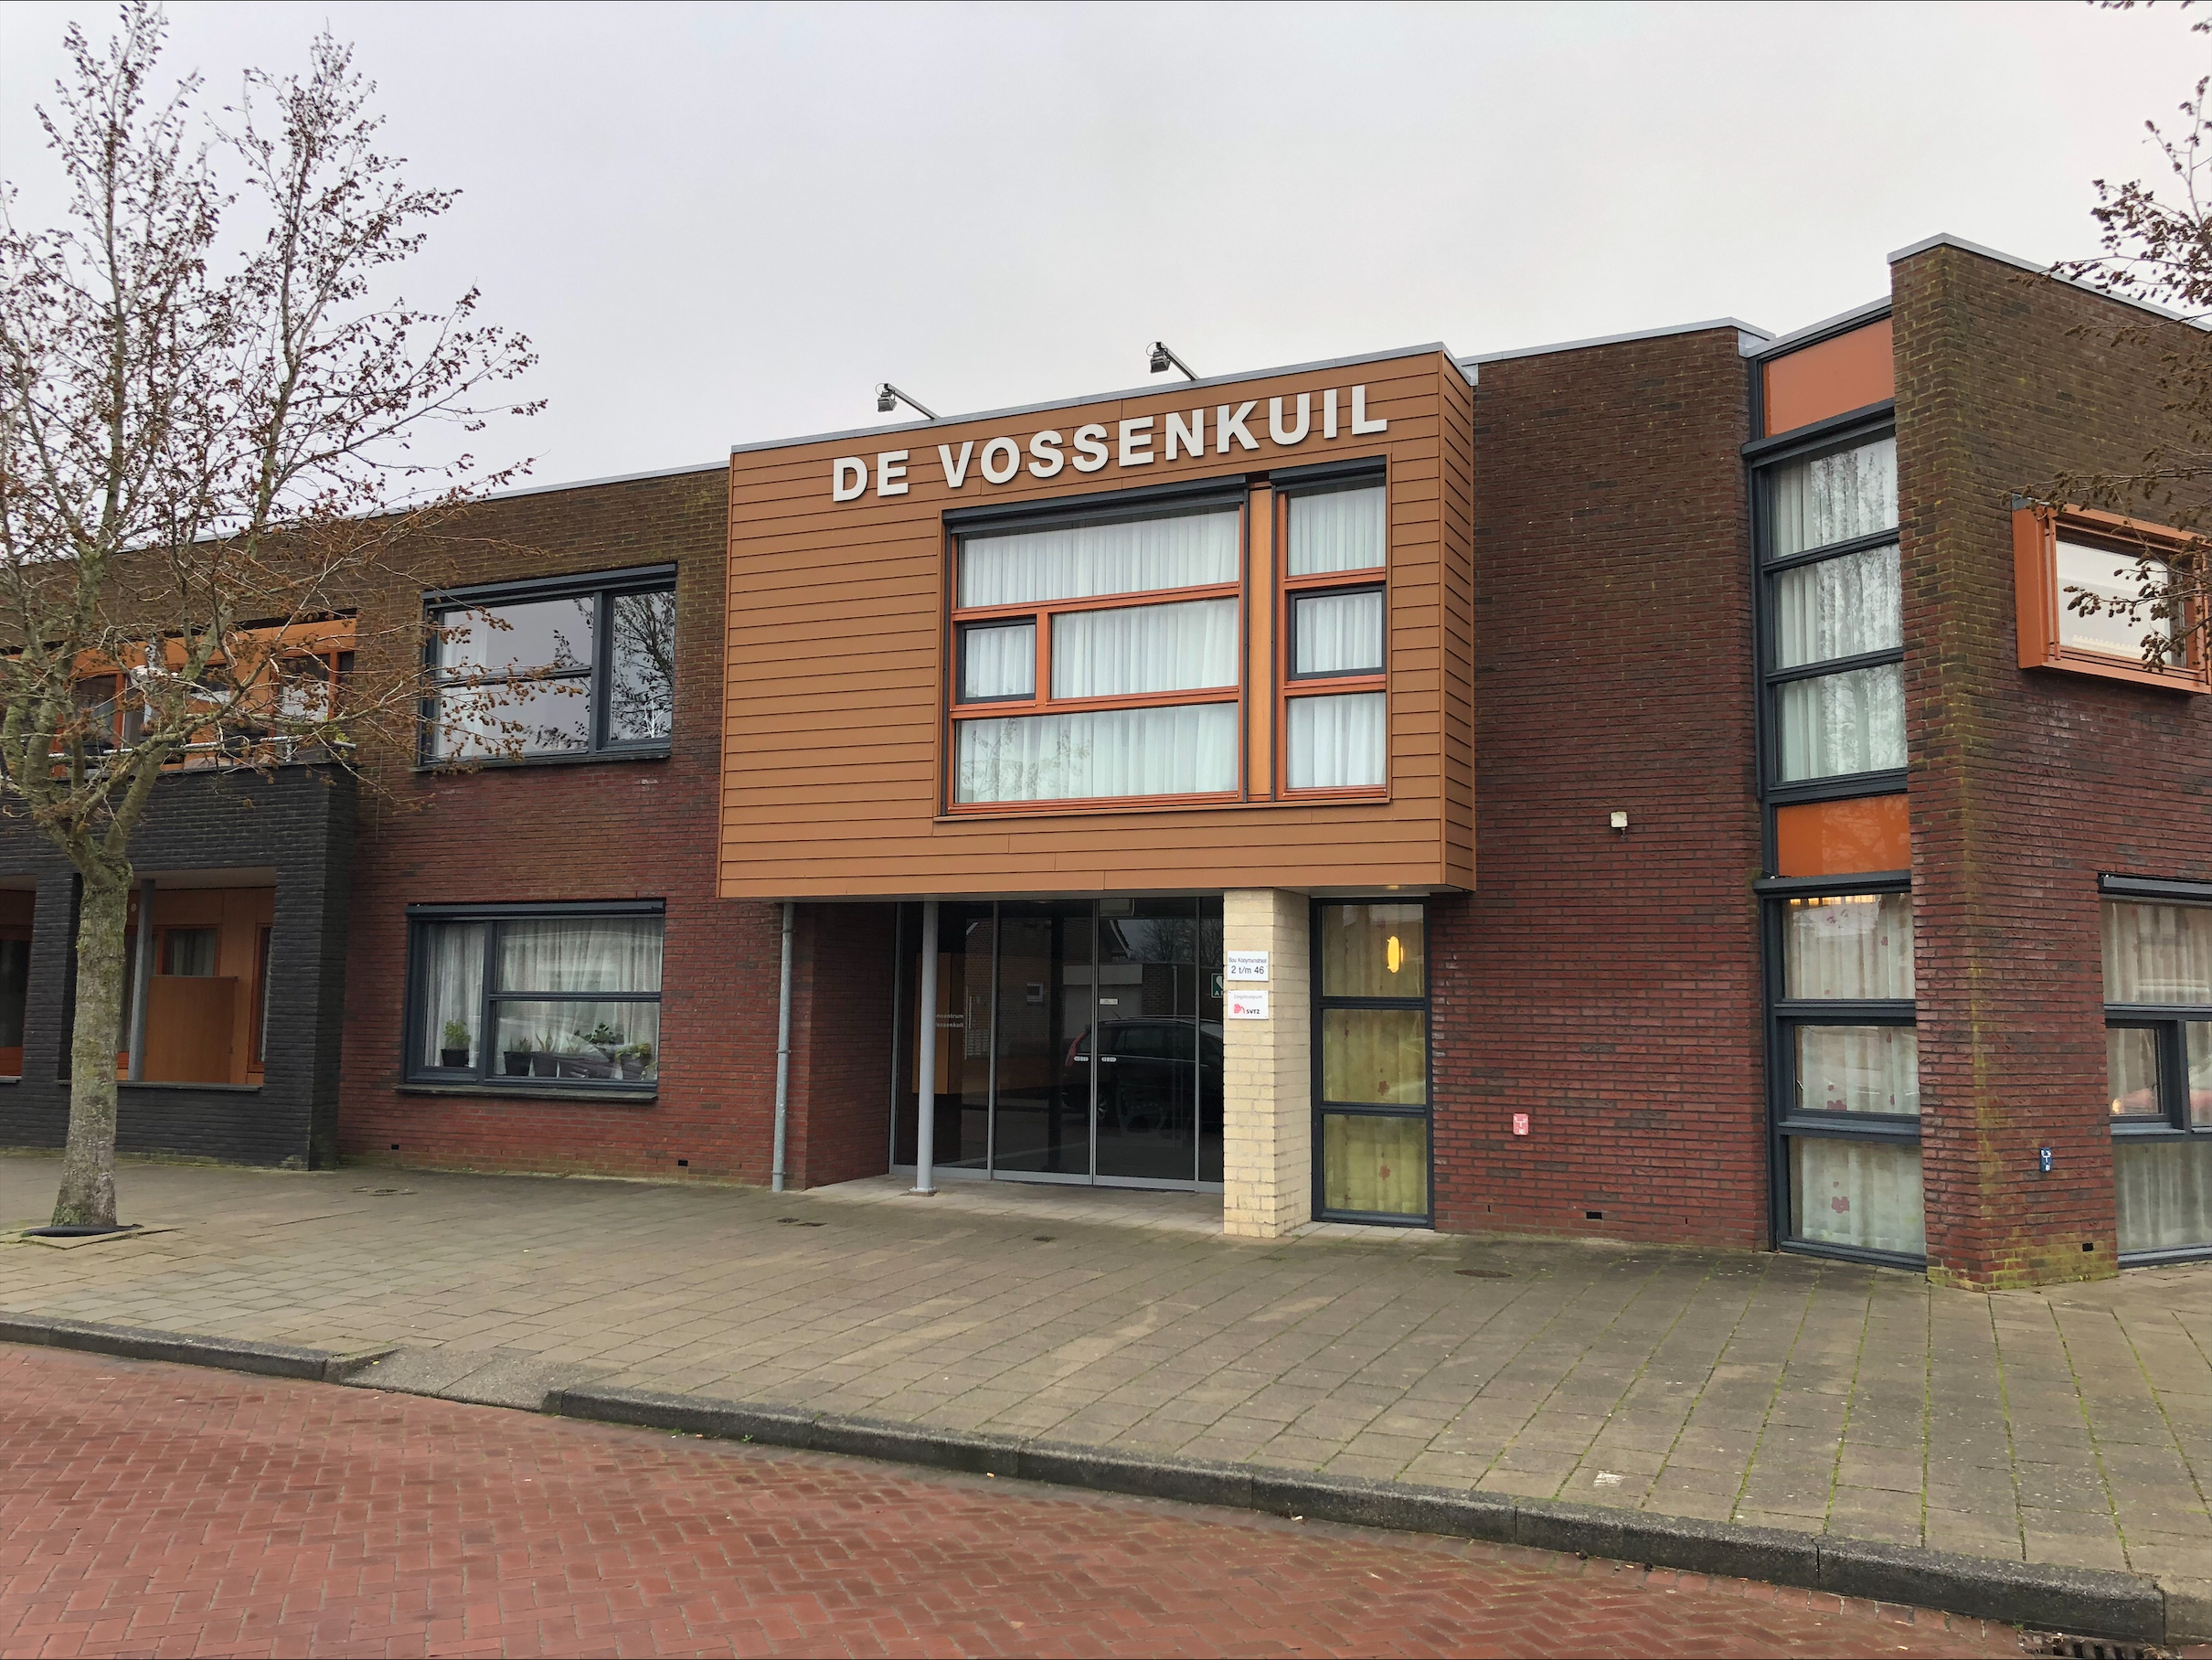 Bou Kooijmanstraat 10, 4698 AM Oud-Vossemeer, Nederland